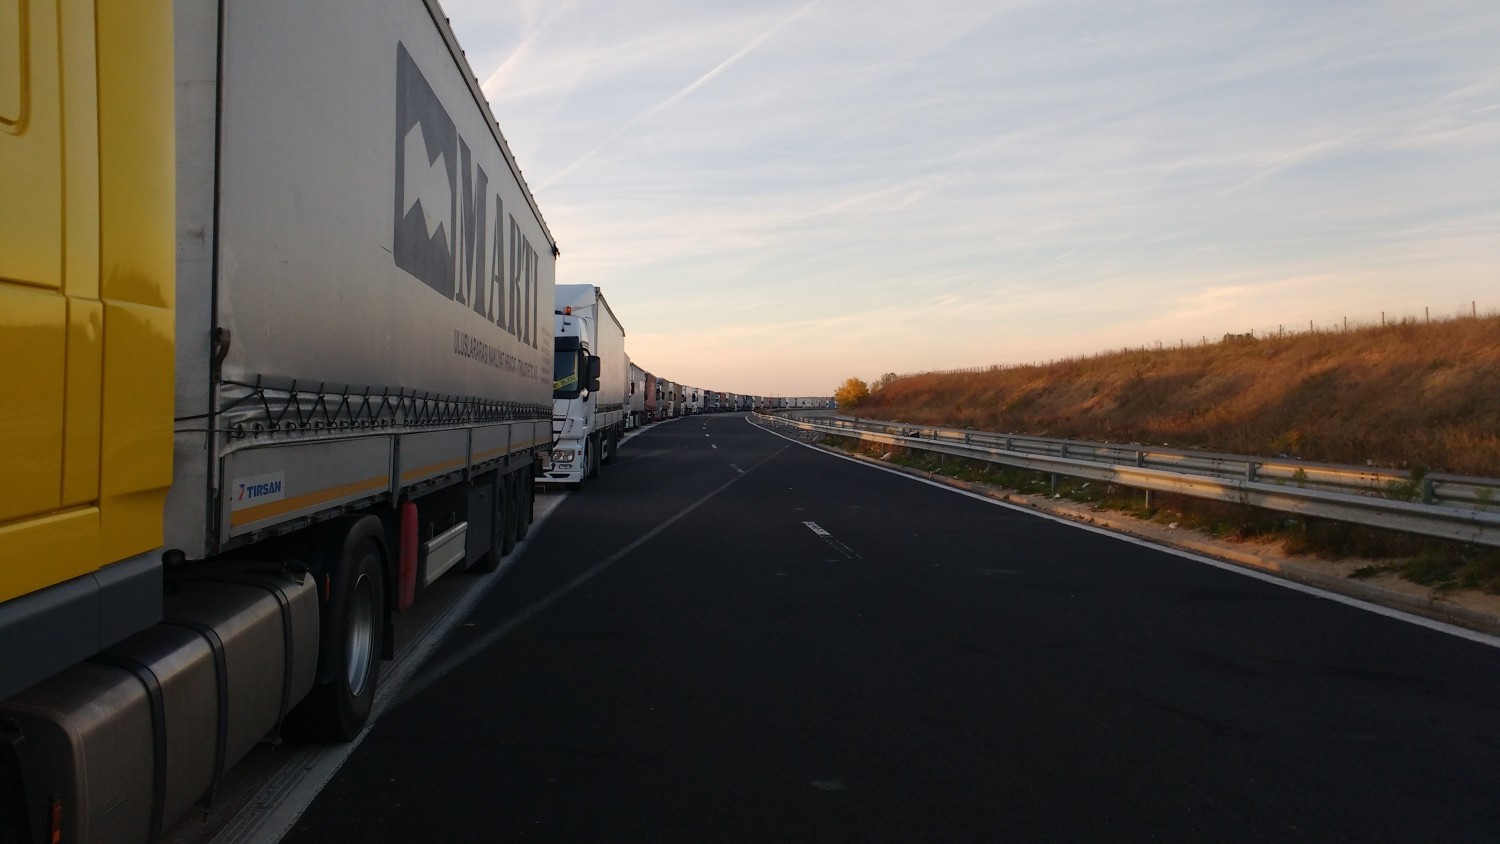 15 kilometer of trucks